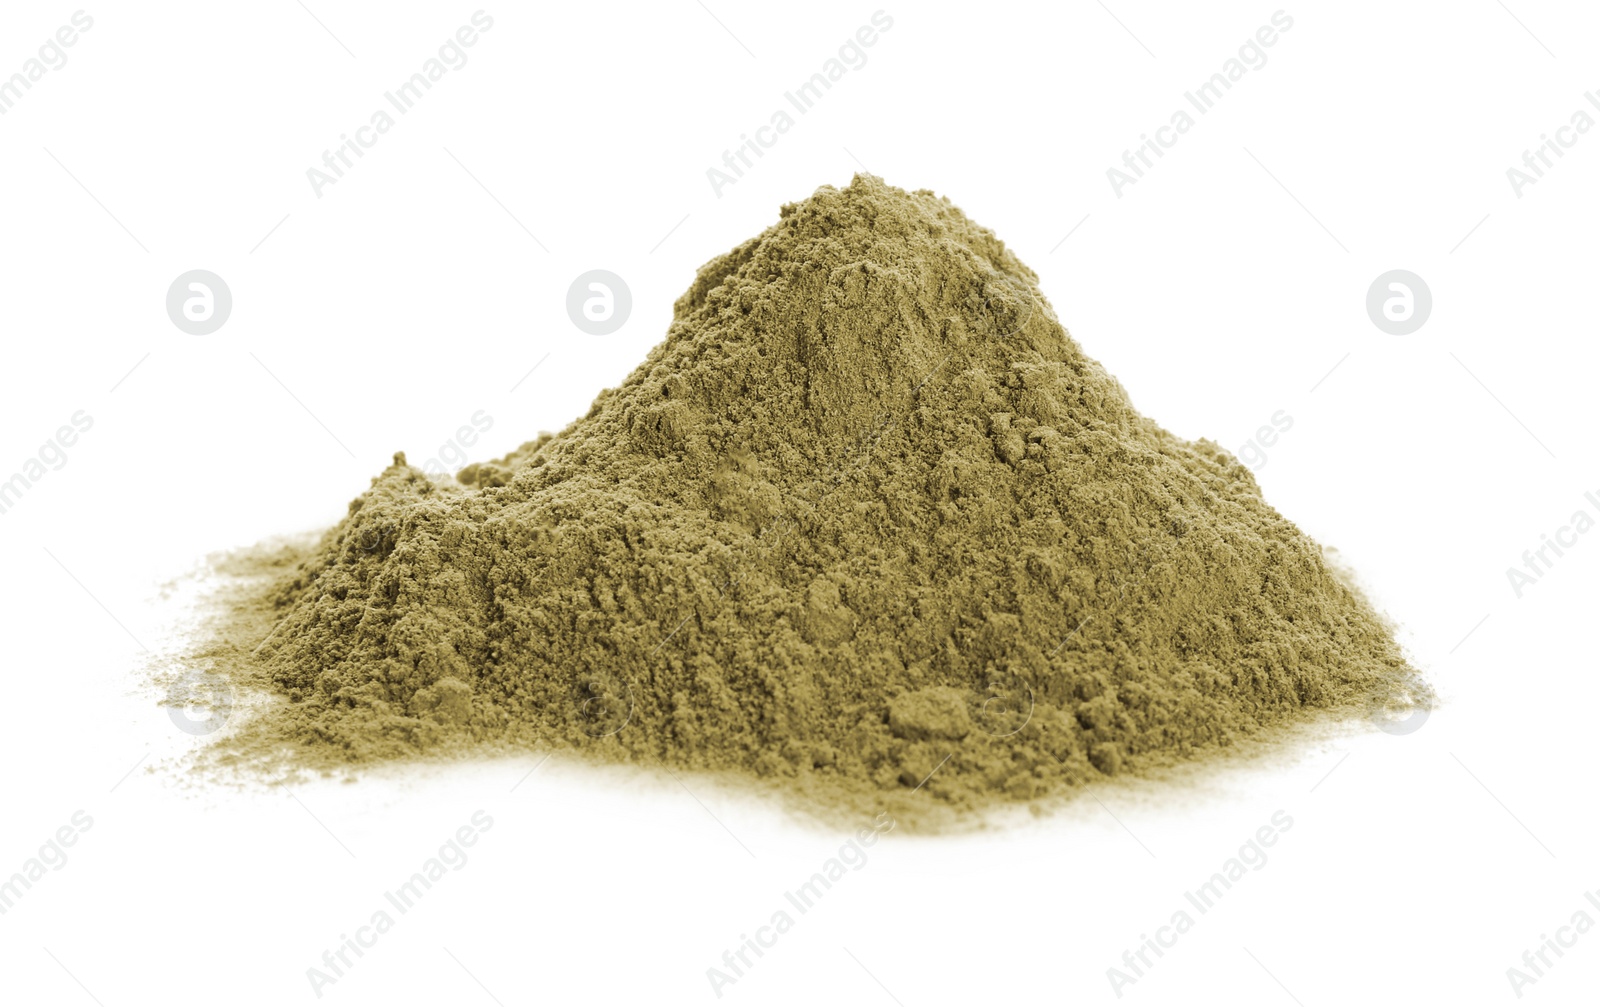 Photo of Heap of hemp protein powder on white background